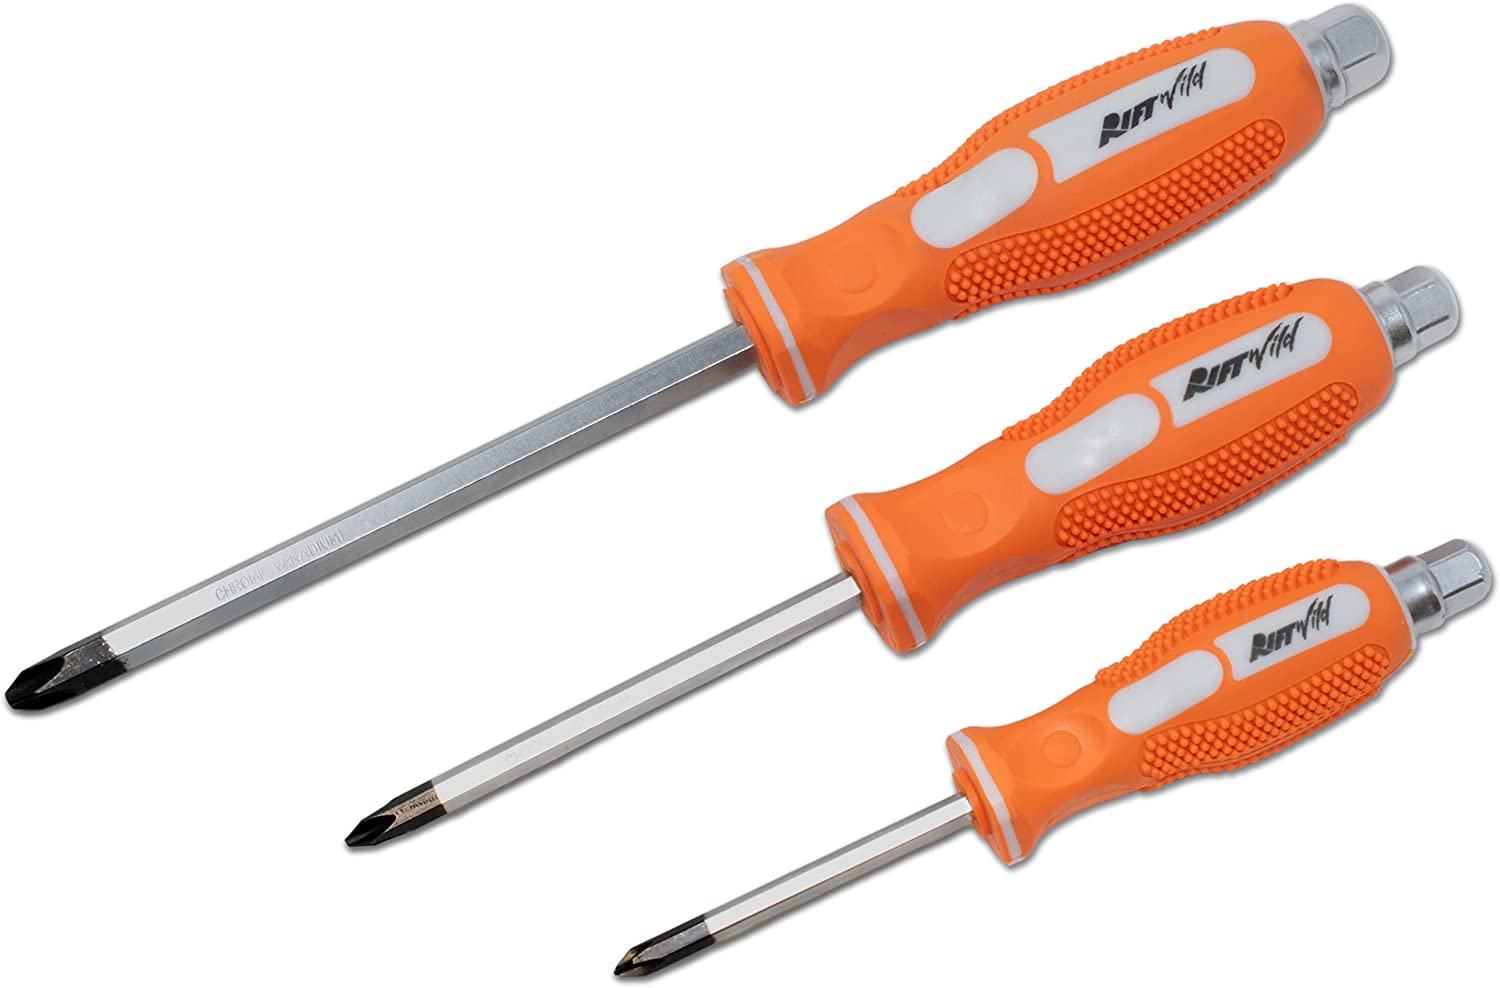 Amazon types of screwdrivers Japanese Industrial Standard Screwdriver